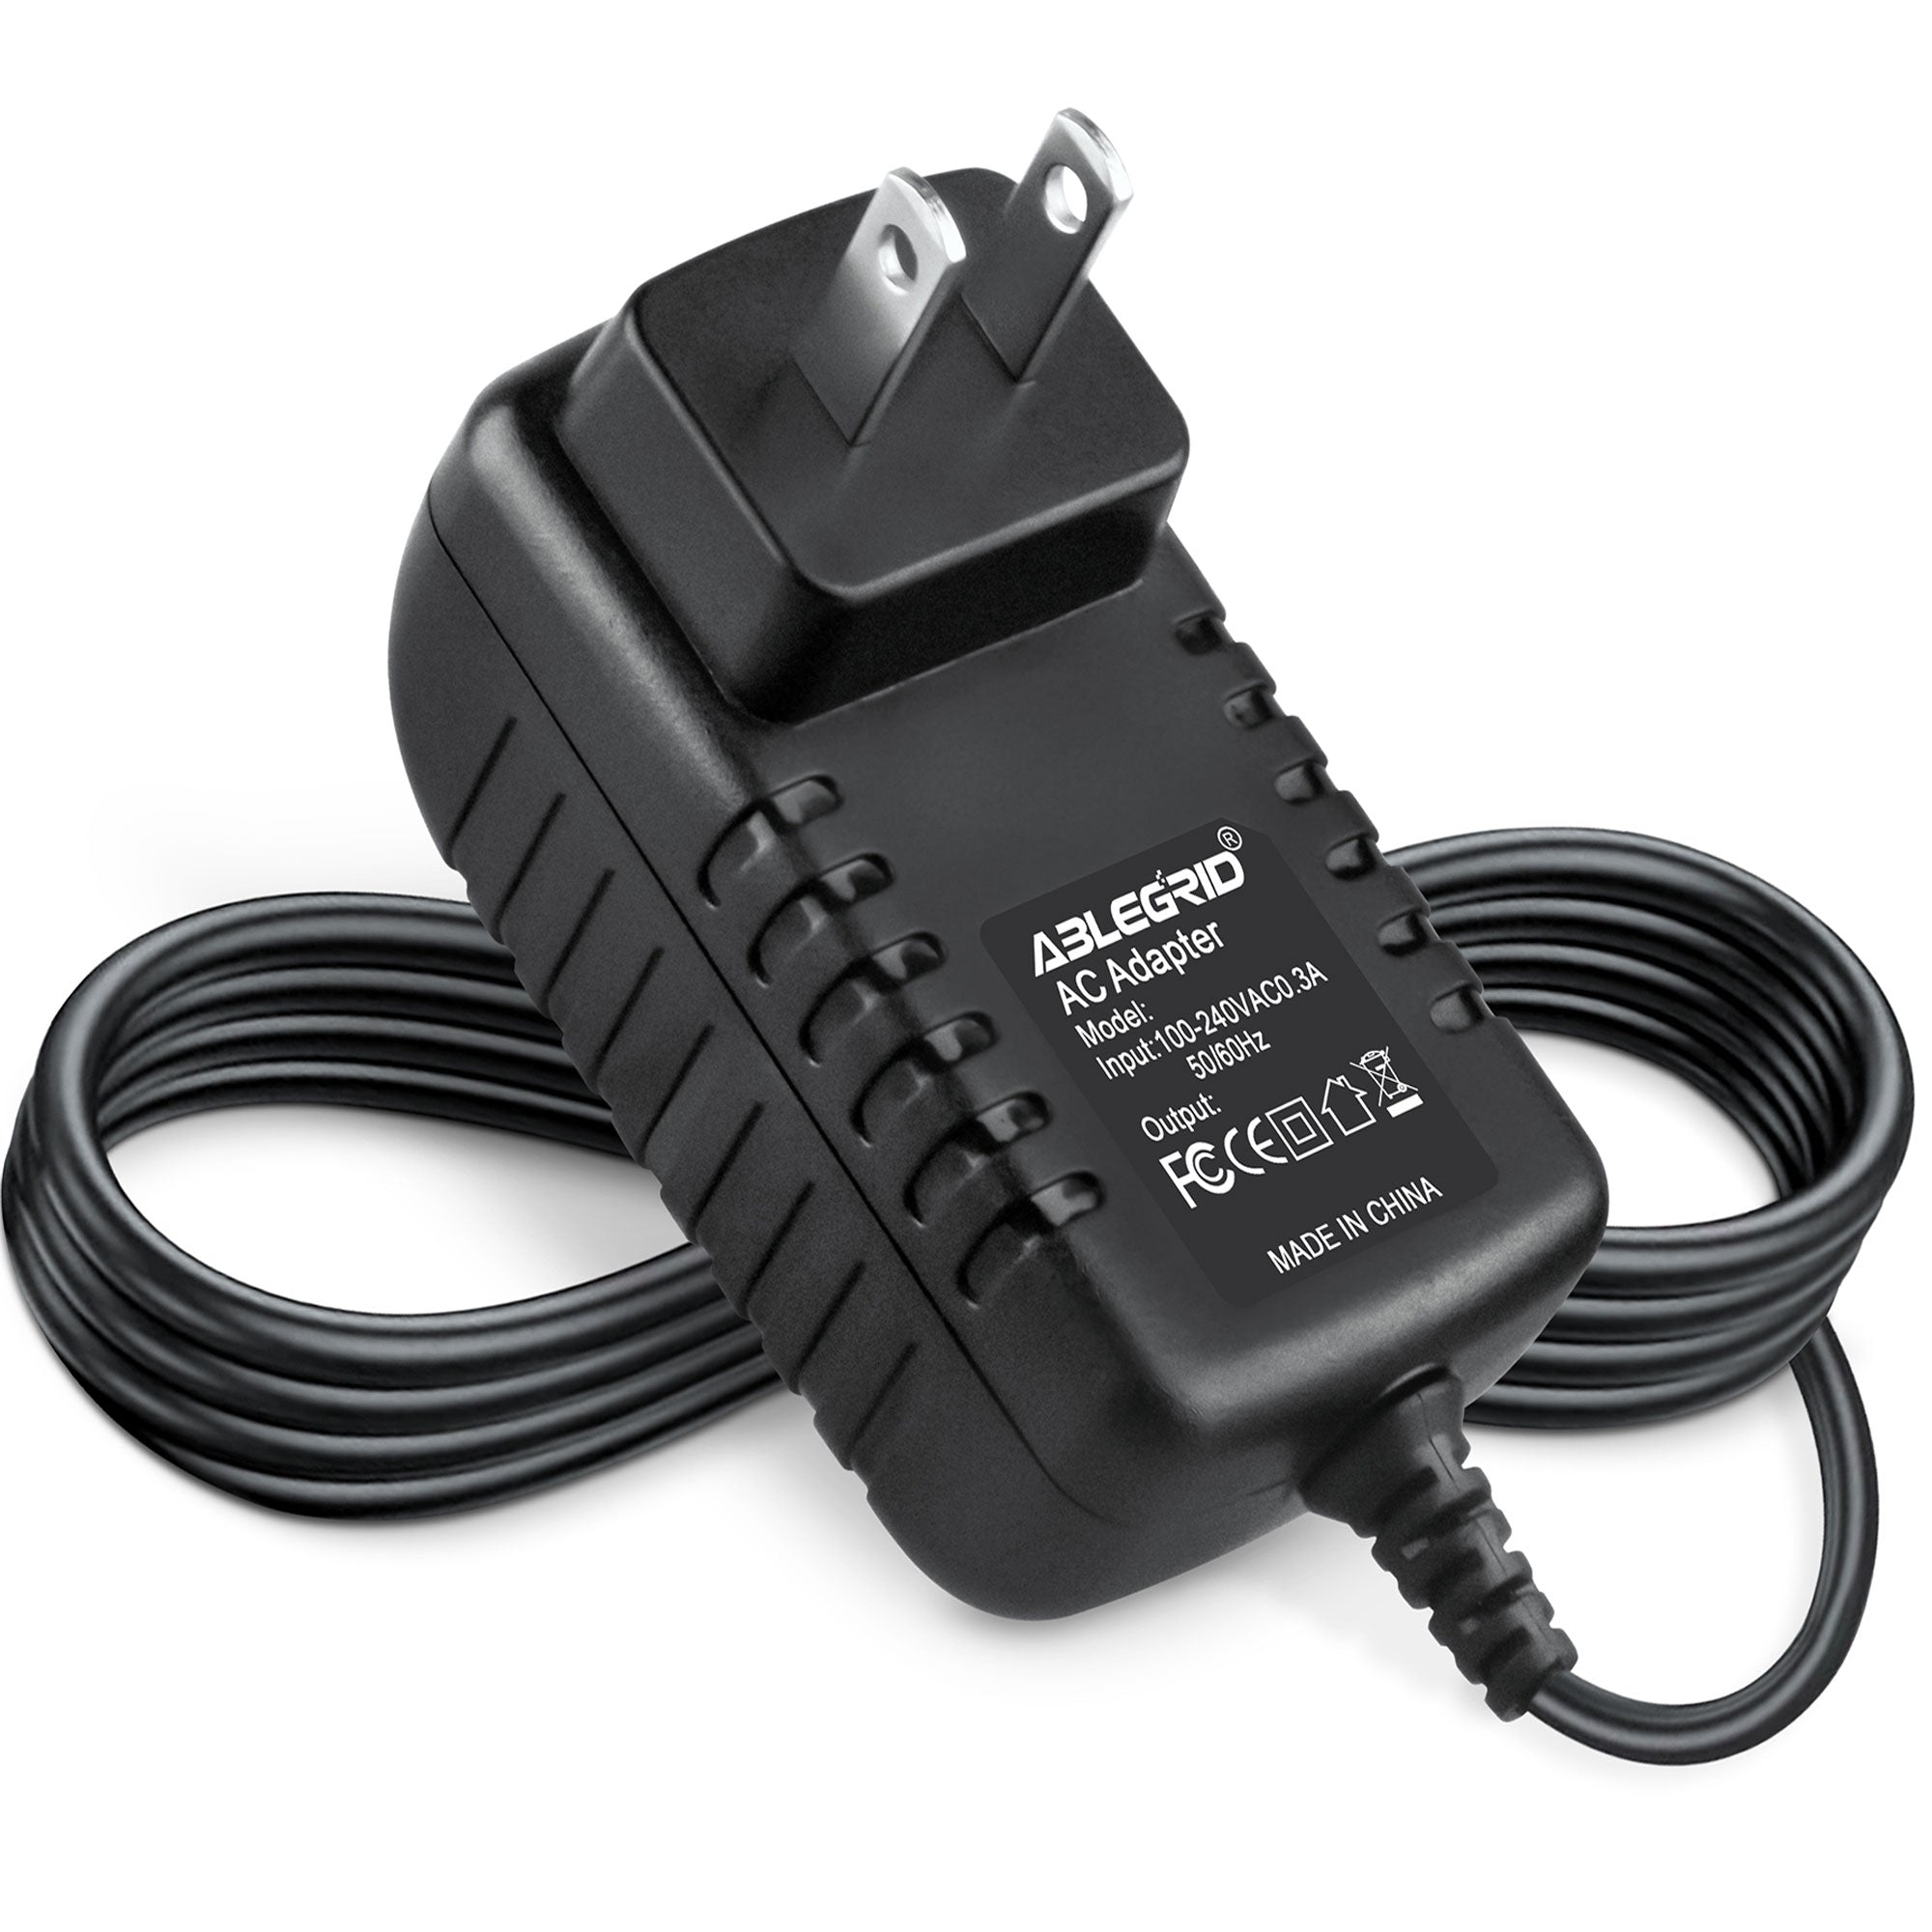 AbleGrid AC-DC Adapter for Standard Horizon Radio C160 C460 C168 C468 AT200 AT201 AT400 AT401 Power Supply Cord Charger PSU